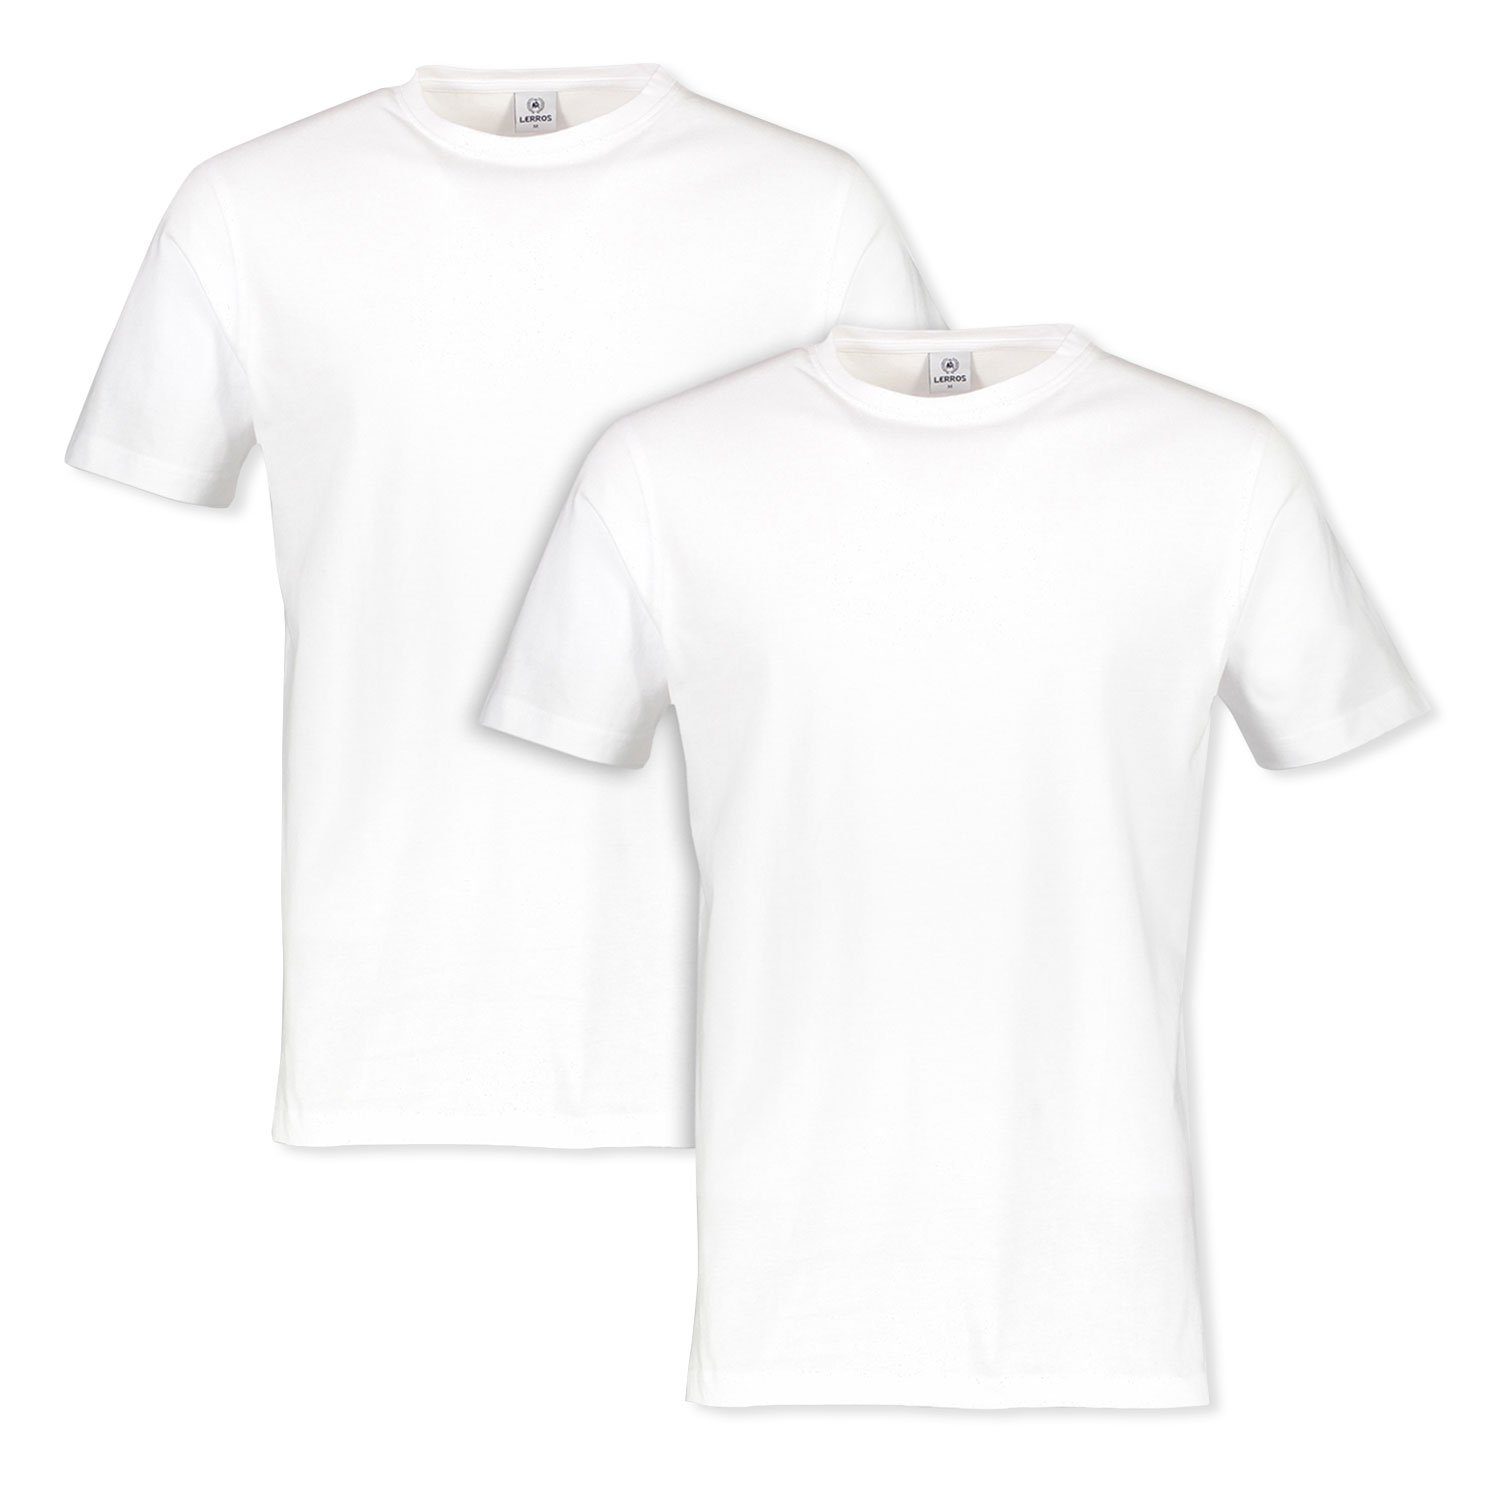 white klassischer in 2-tlg) (Packung, Optik T-Shirt LERROS